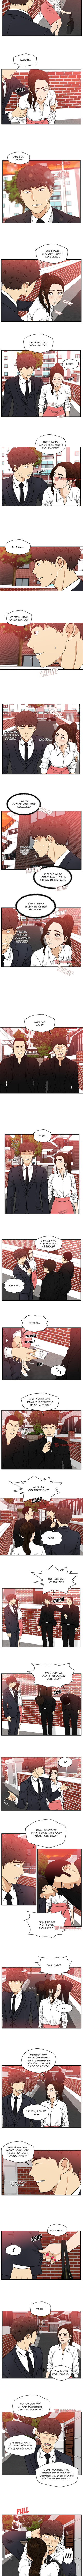 Mr. Kang - Chapter 86 Page 2